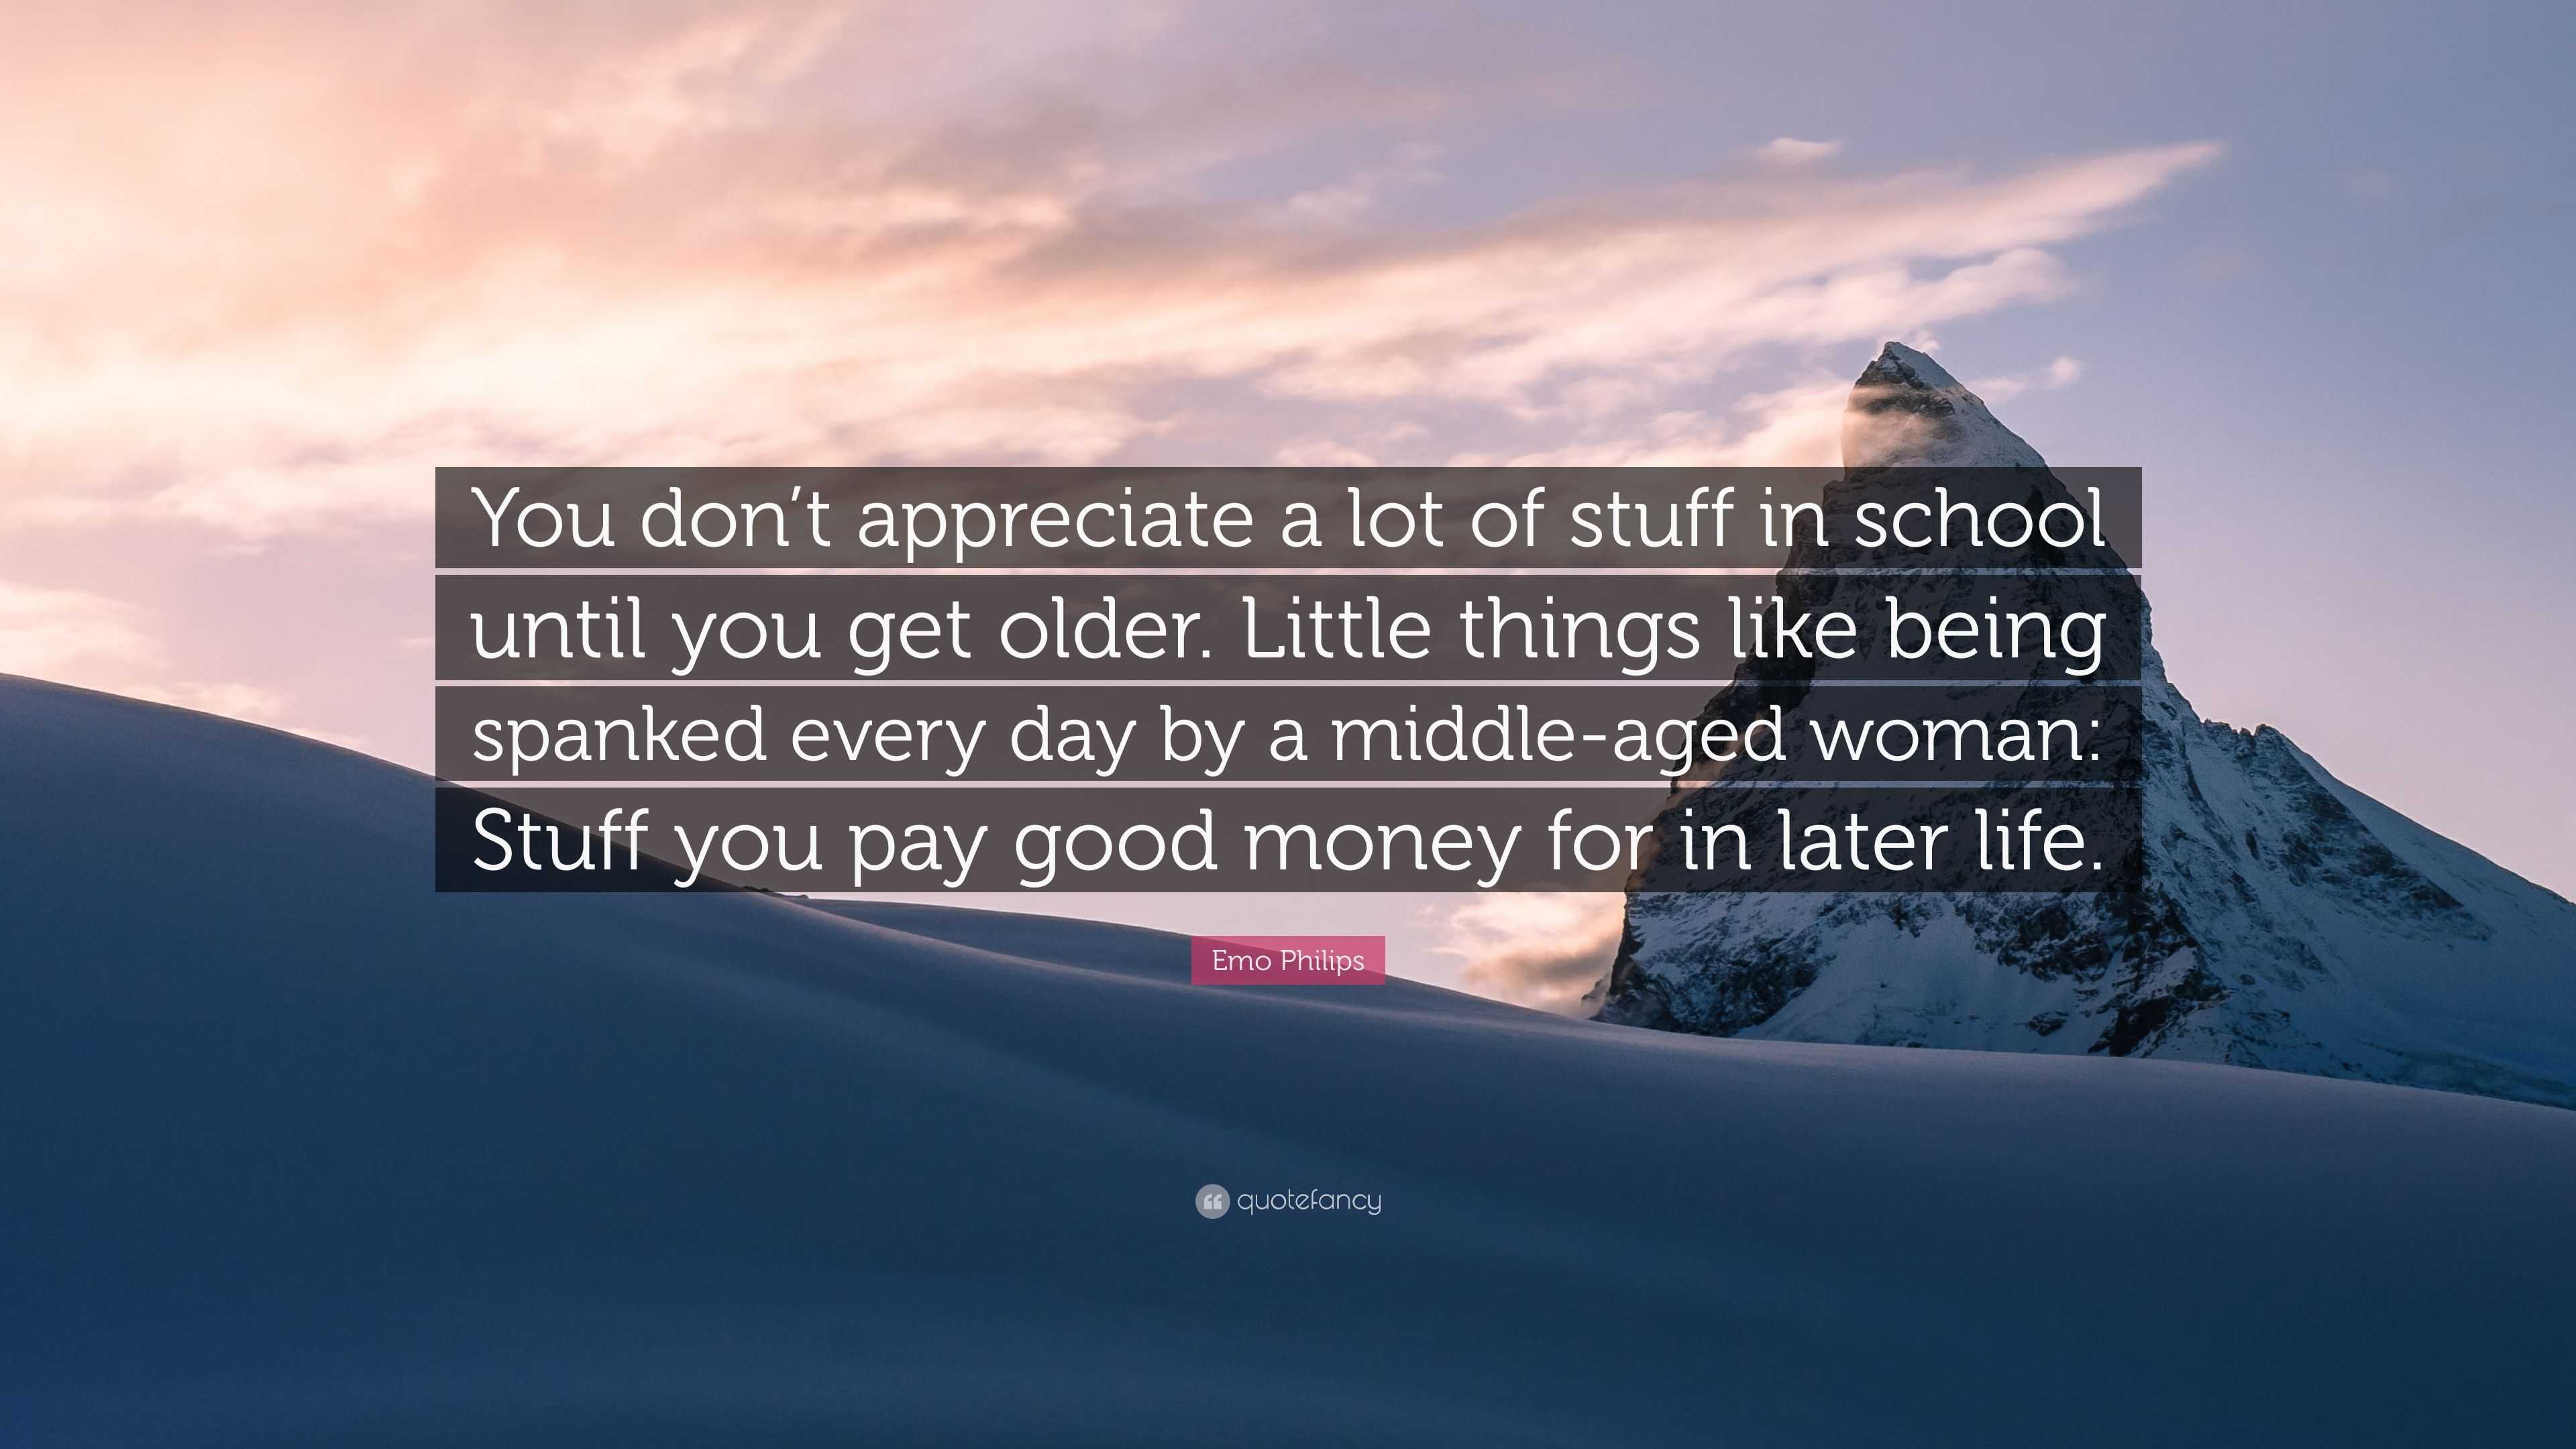 Emo Philips Quote “You don t appreciate a lot of stuff in school